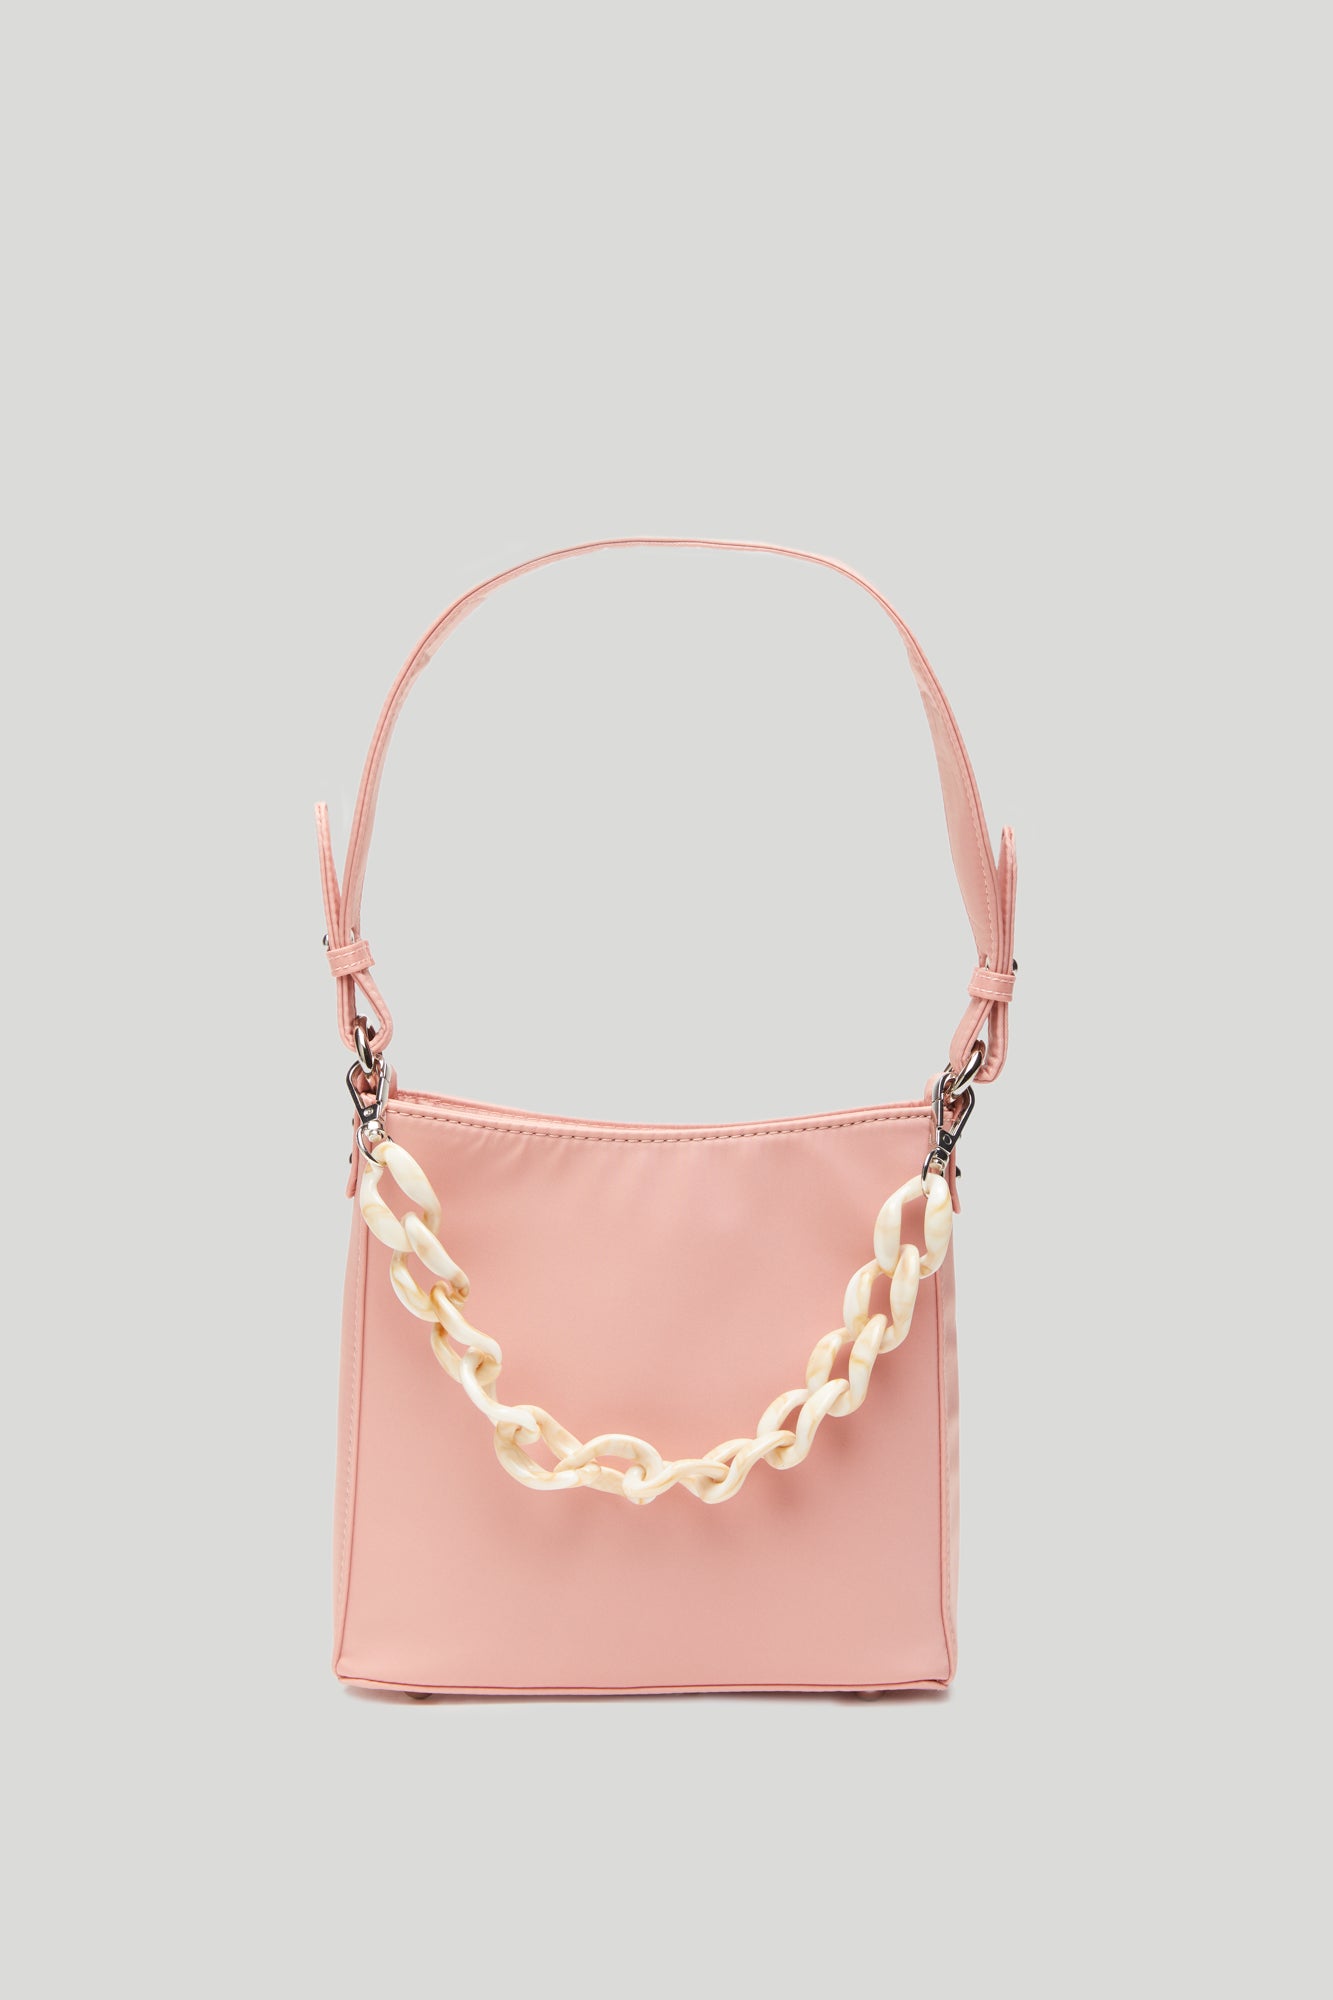 HVISK Amble Bag in Pink Recycled Nylon